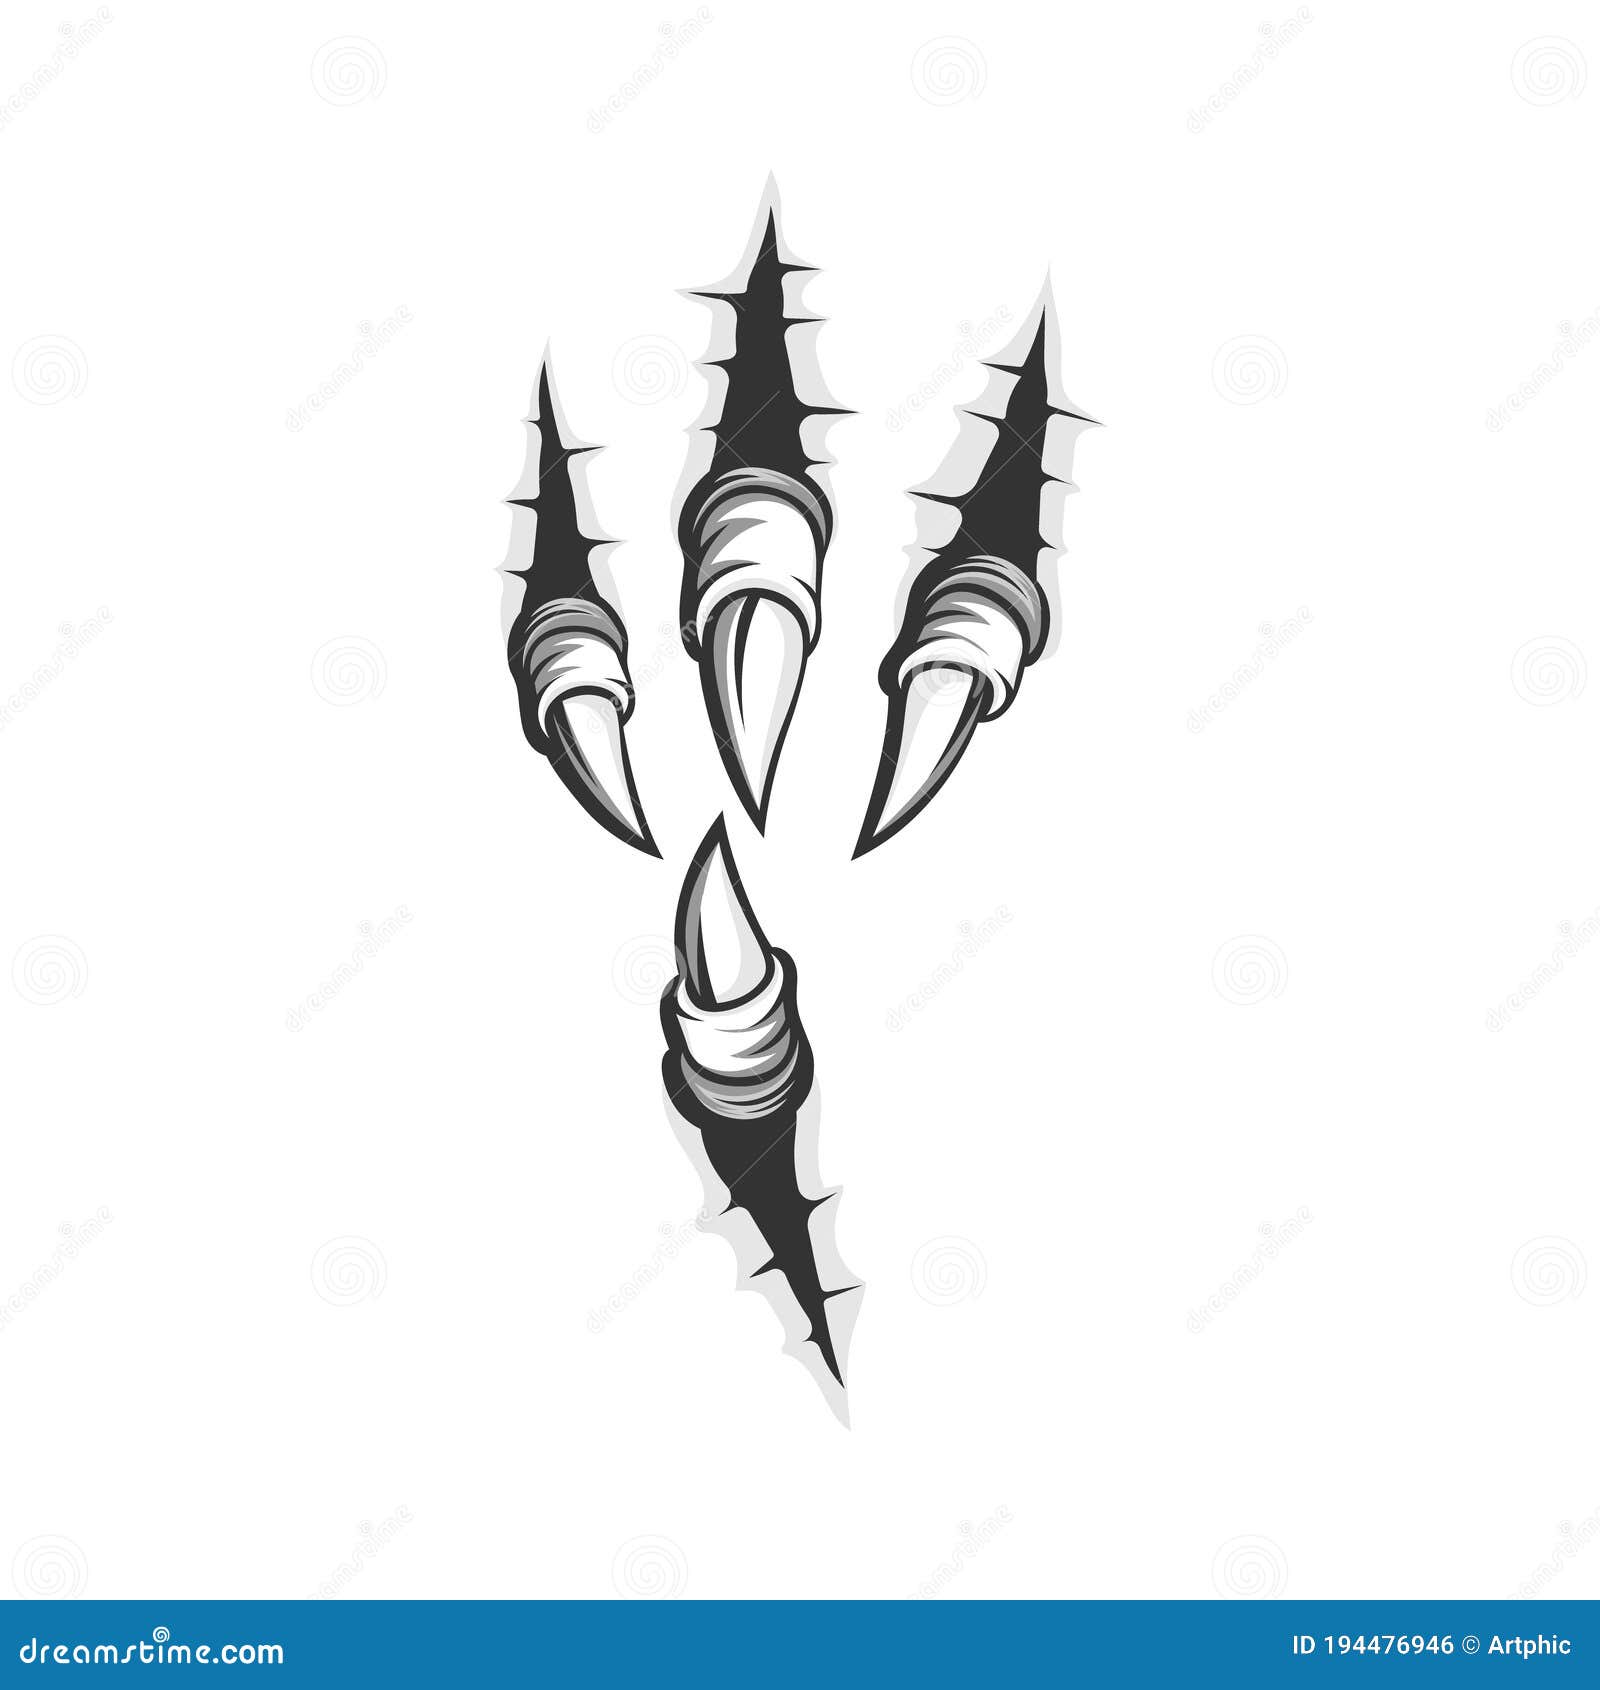 Eagle Claw Talon Monster Hand Cartoon Vector | CartoonDealer.com #204067373